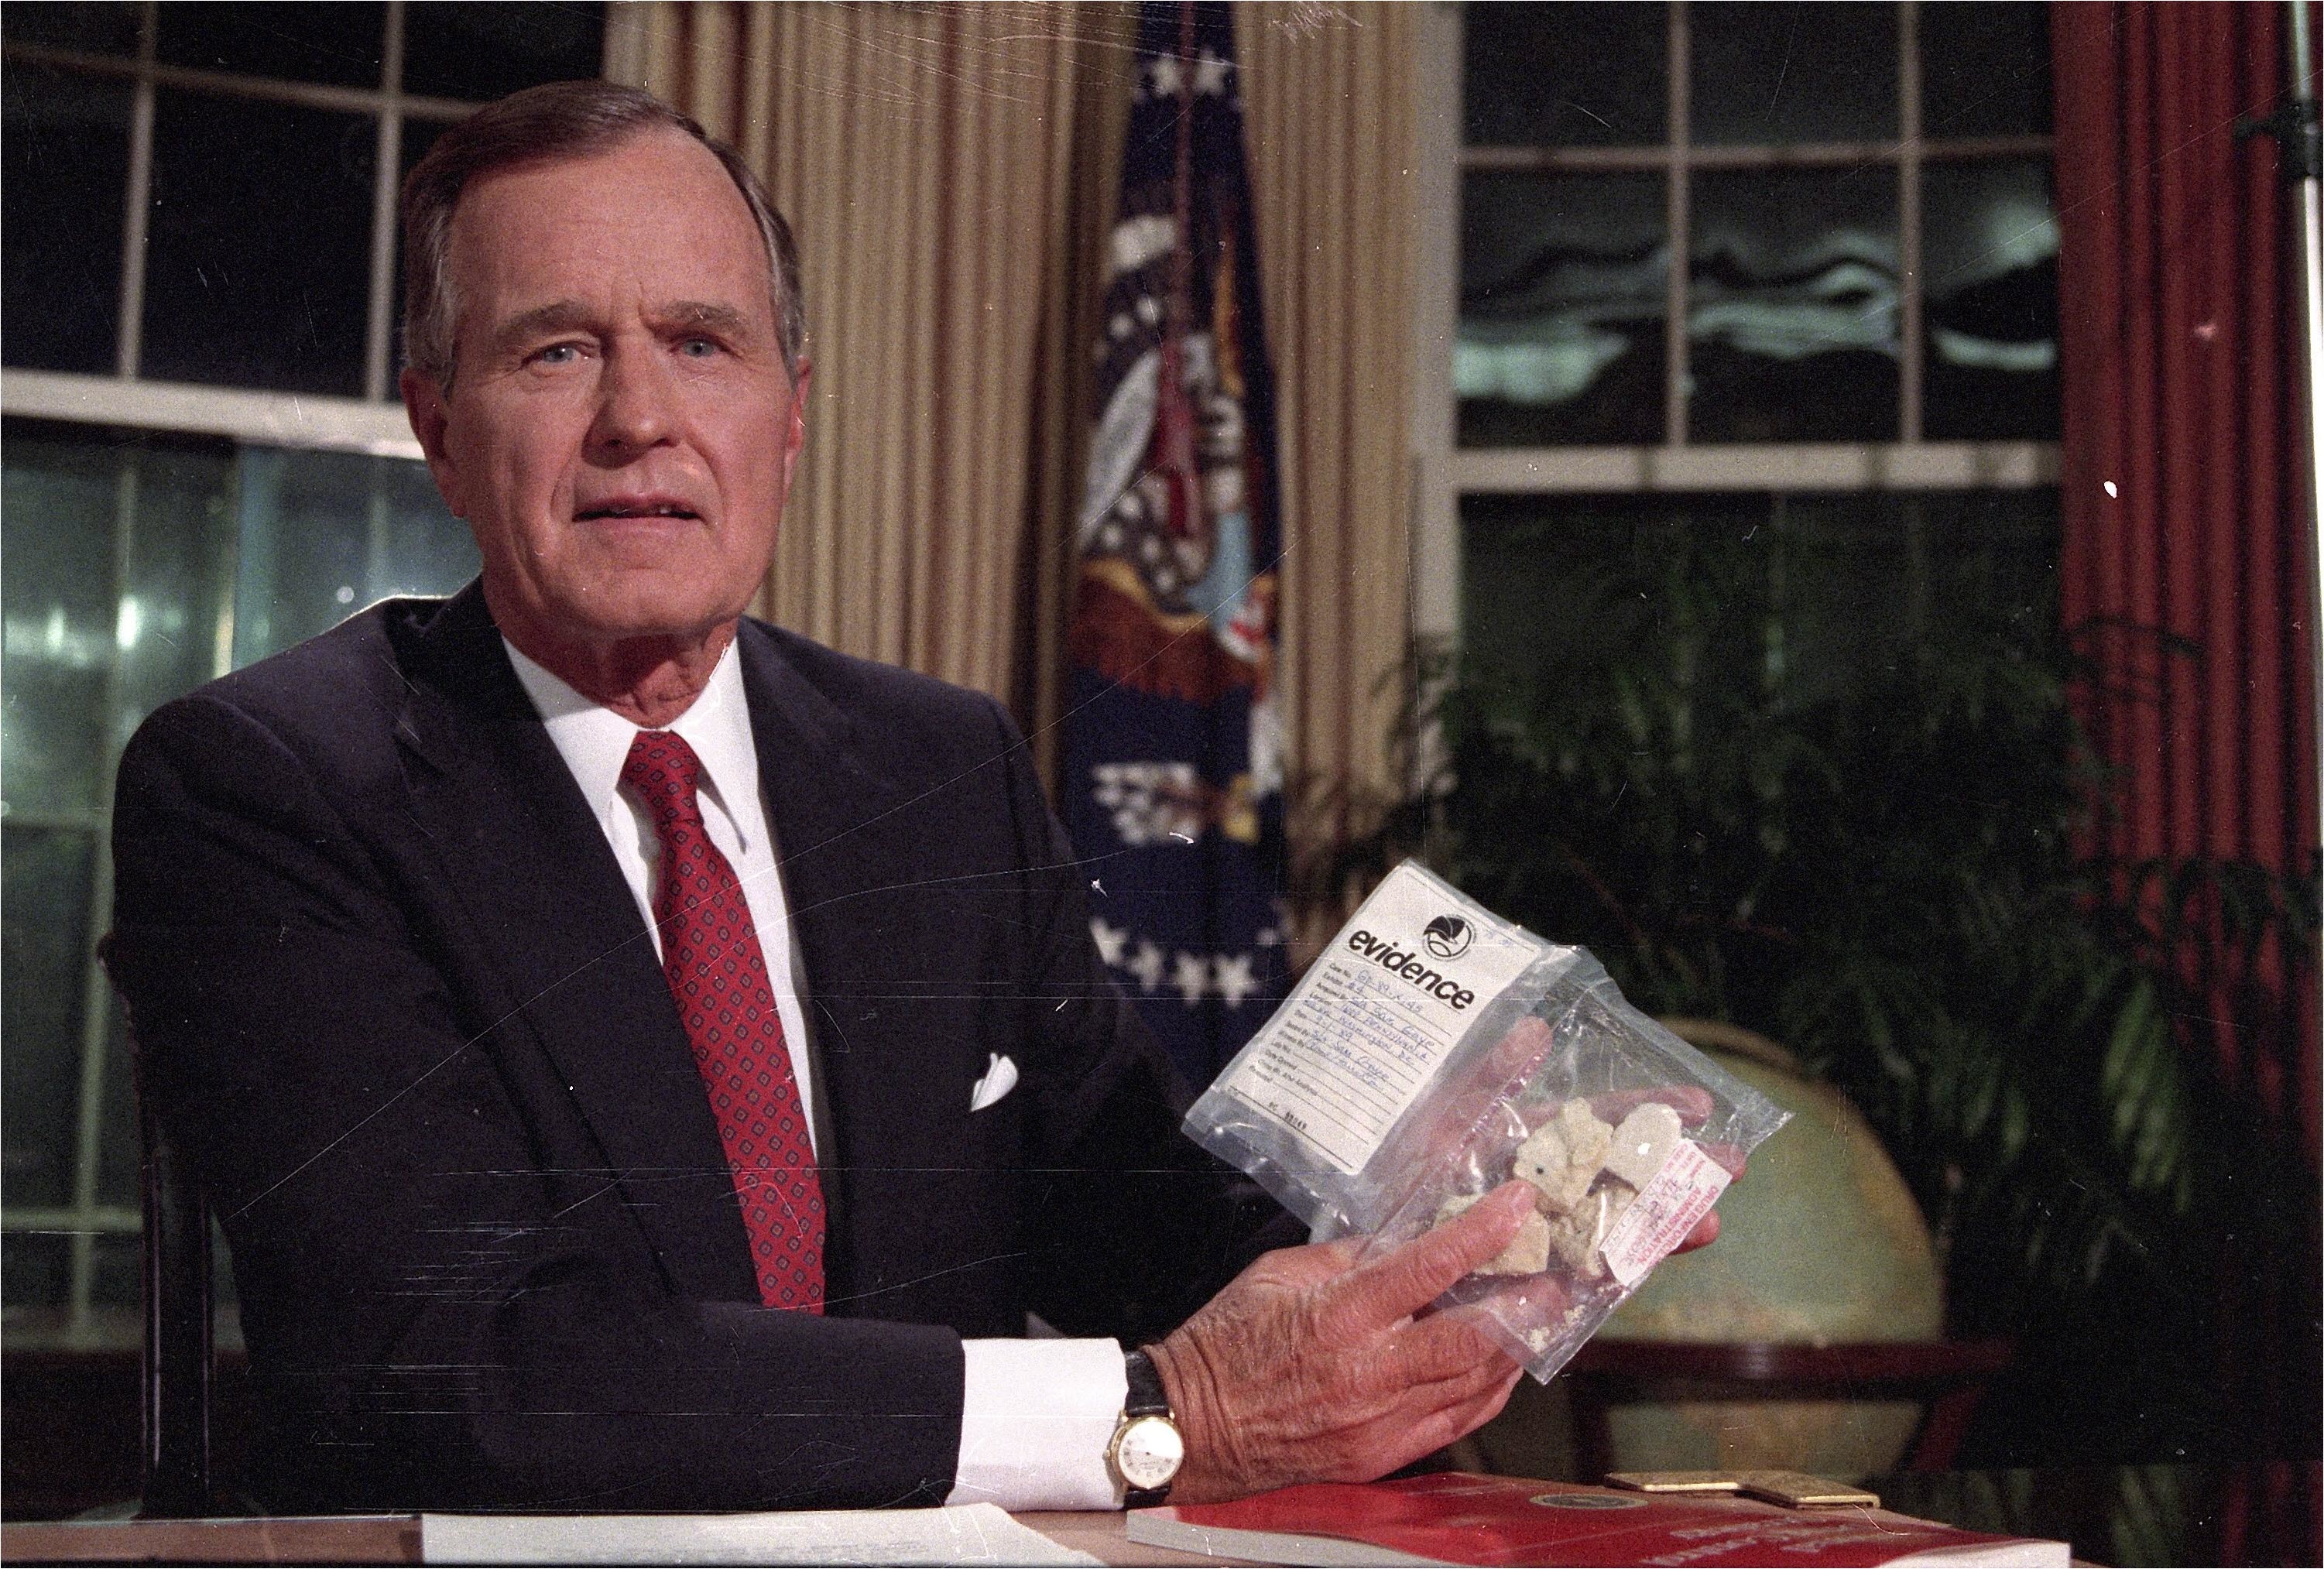 President Bush posing with a bag of crack, circa 1985.